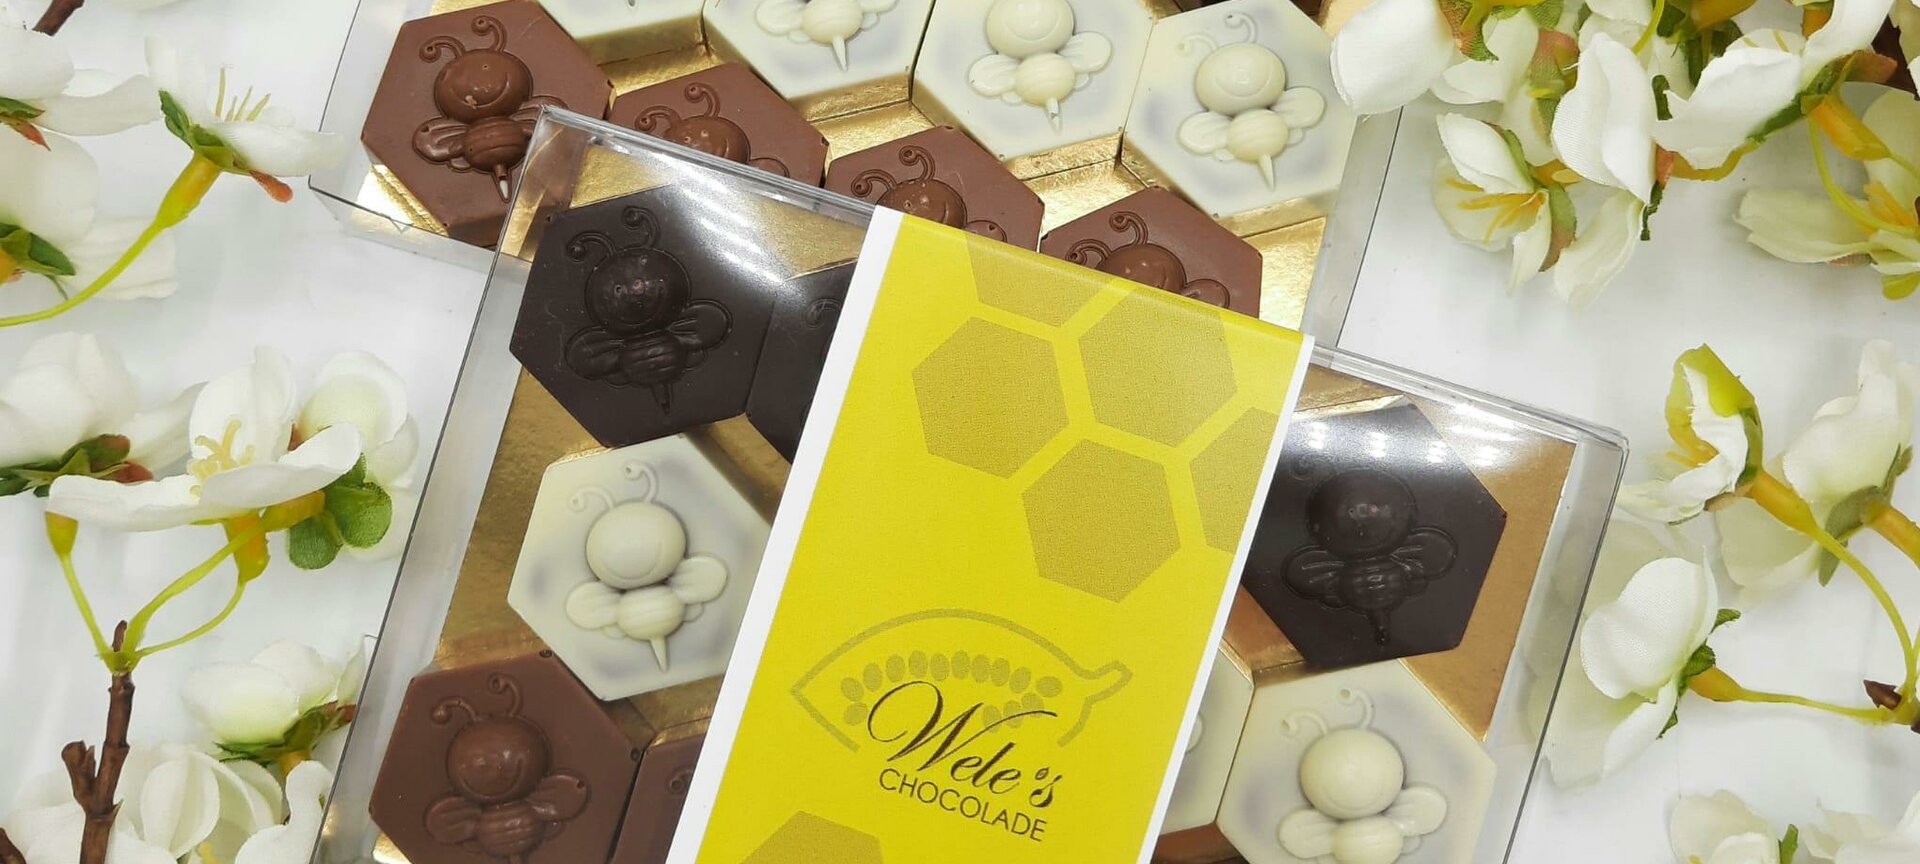 Wele's Chocolade - Honing pralines met eigen honing